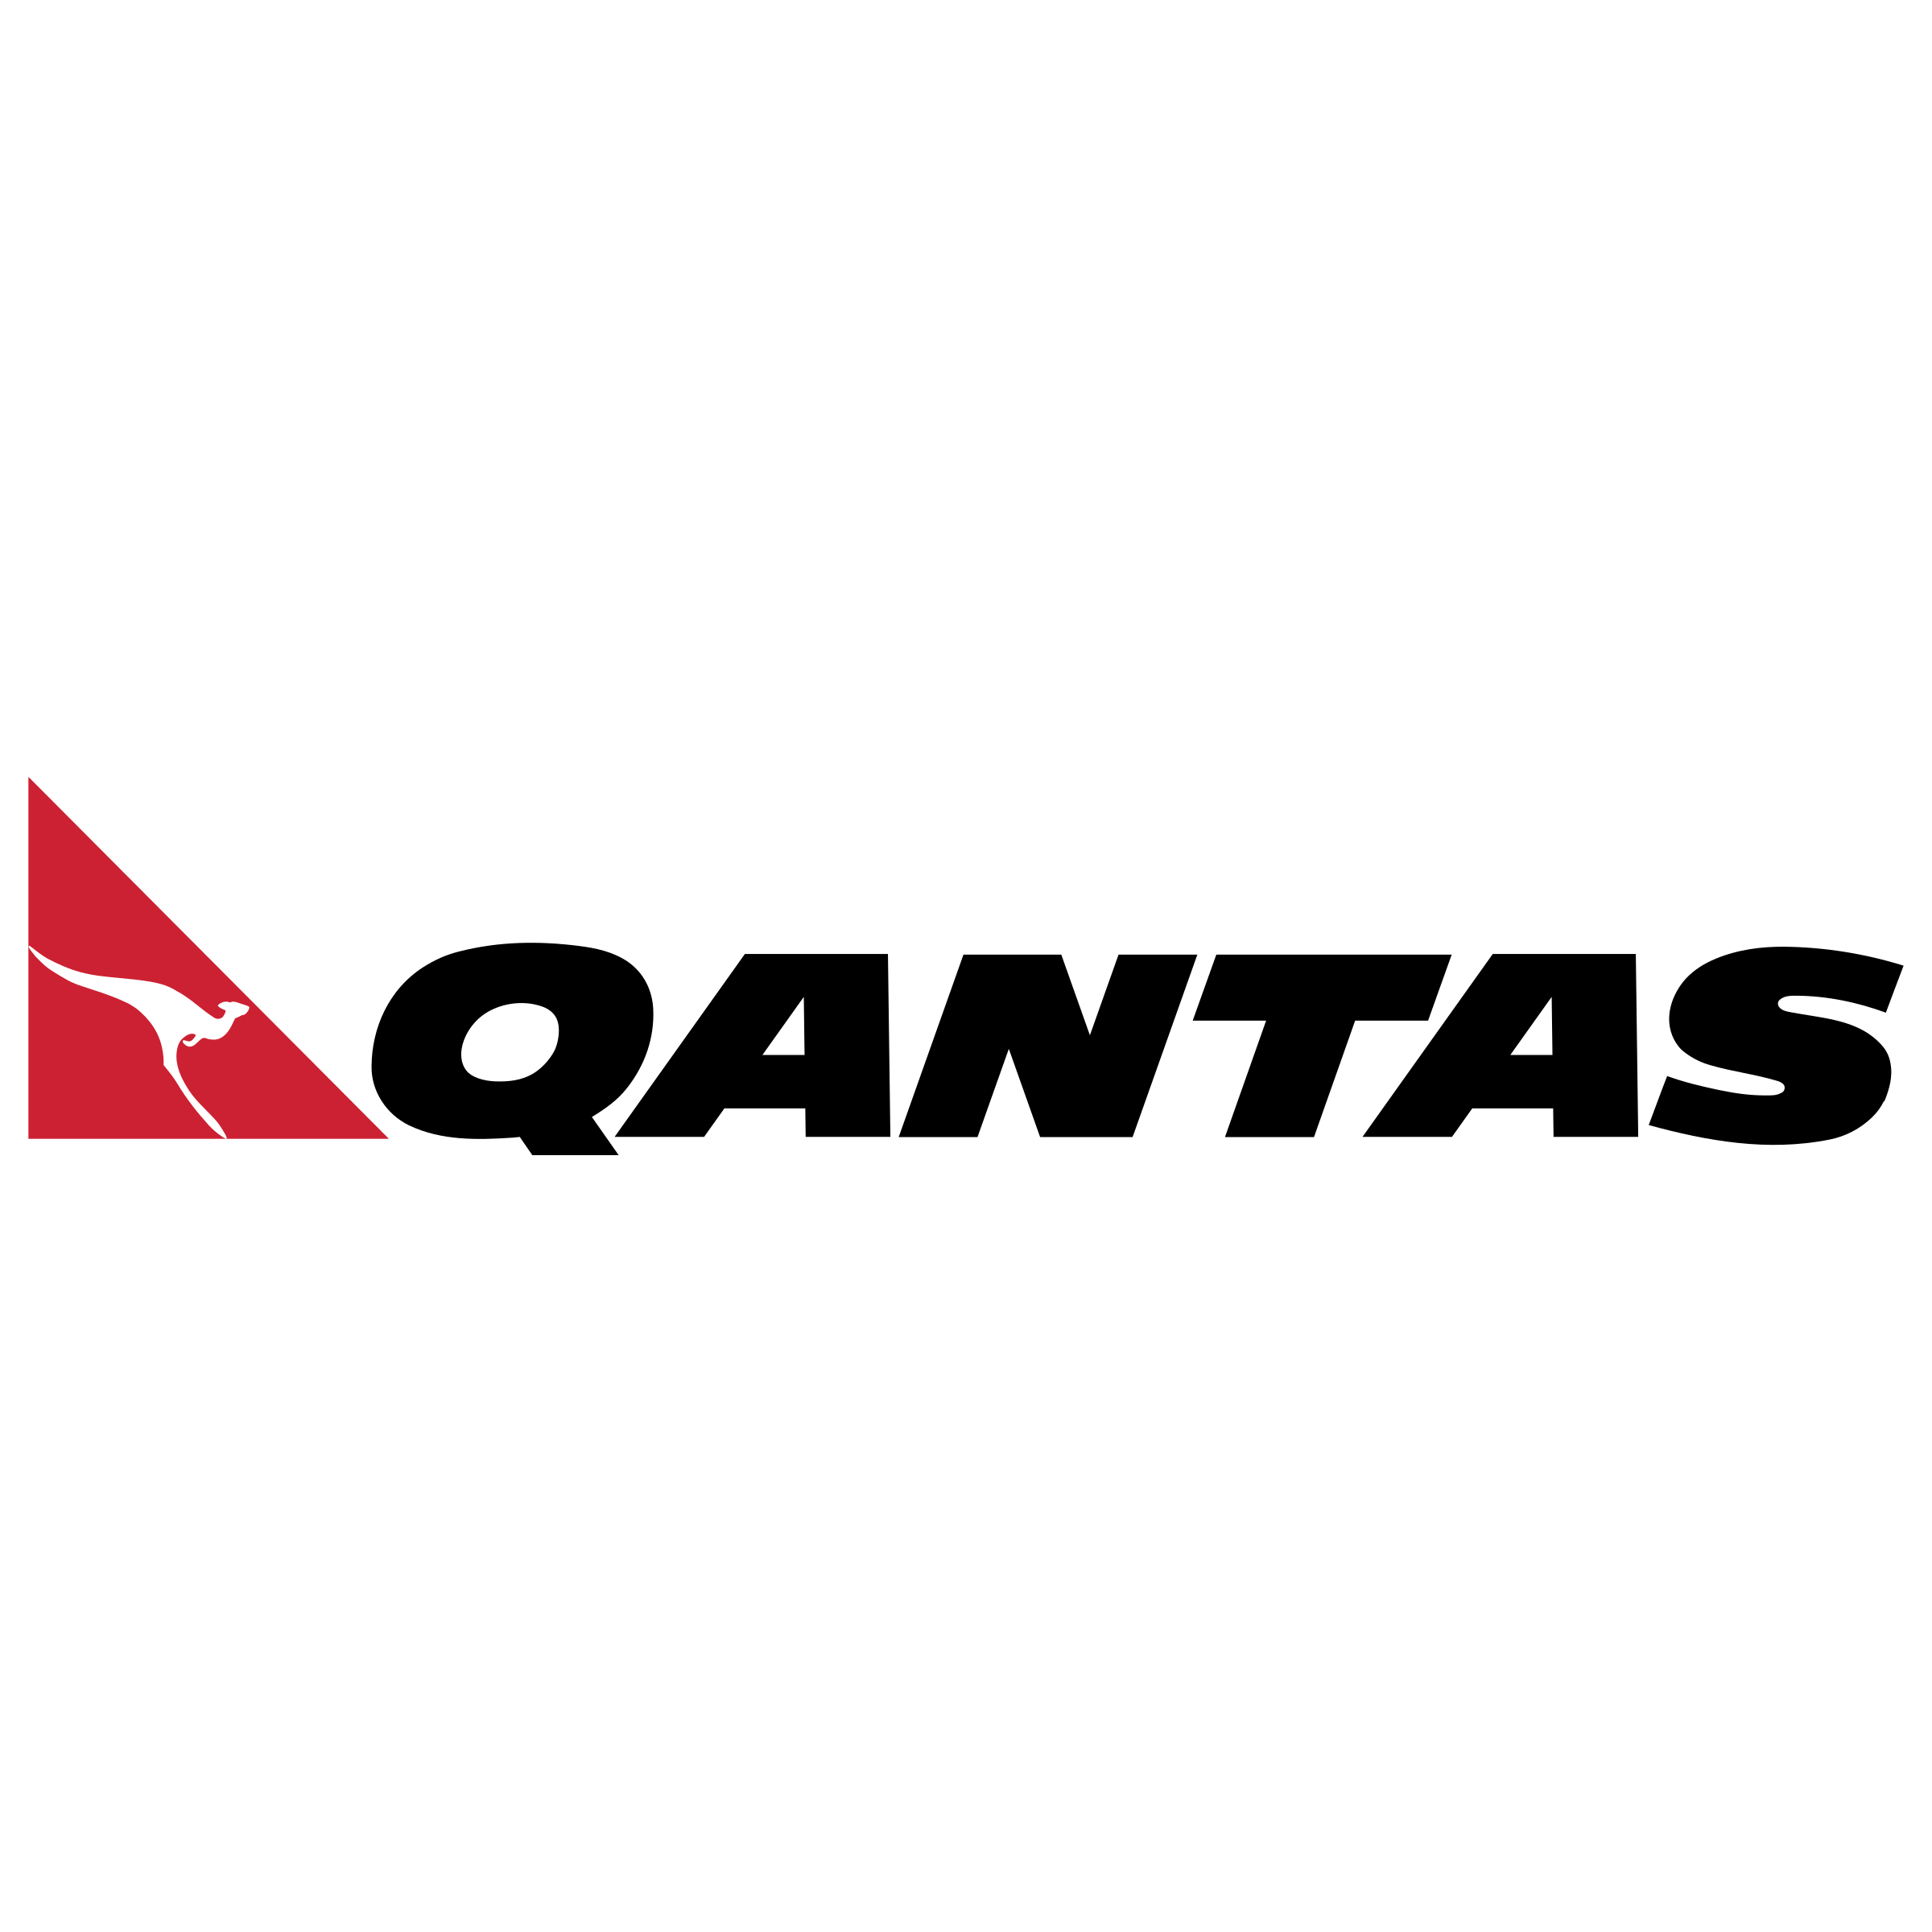 Qantas Logo - Qantas Logo PNG Transparent & SVG Vector - Freebie Supply